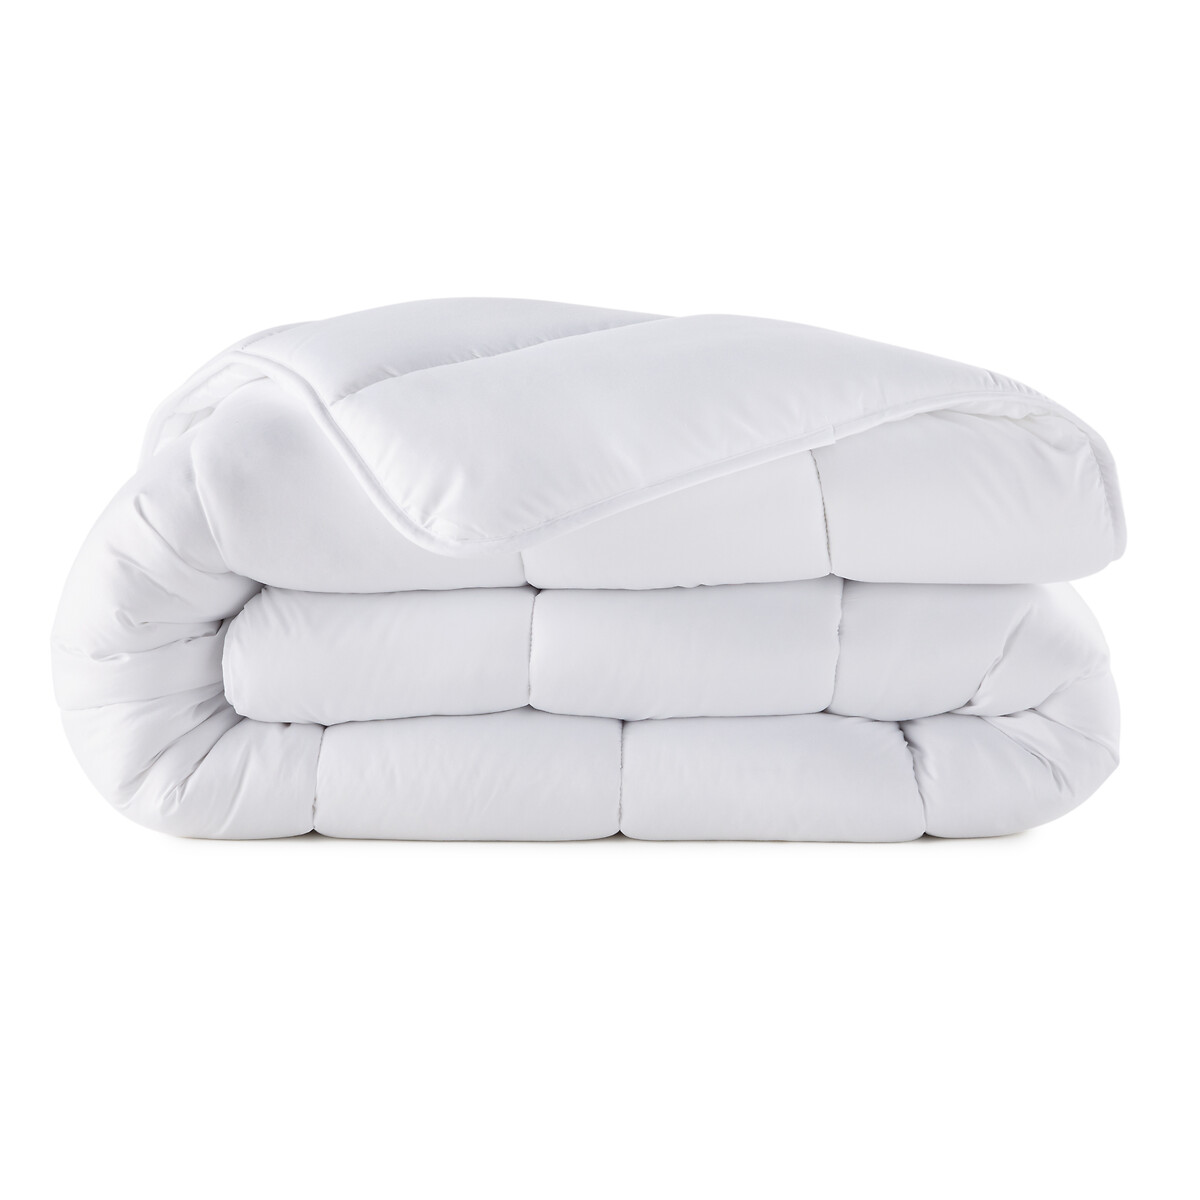 Одеяло синтетическое 300 гм 100 полиэстер  200 x 210 см белый LaRedoute, размер 200 x 210 см - фото 2